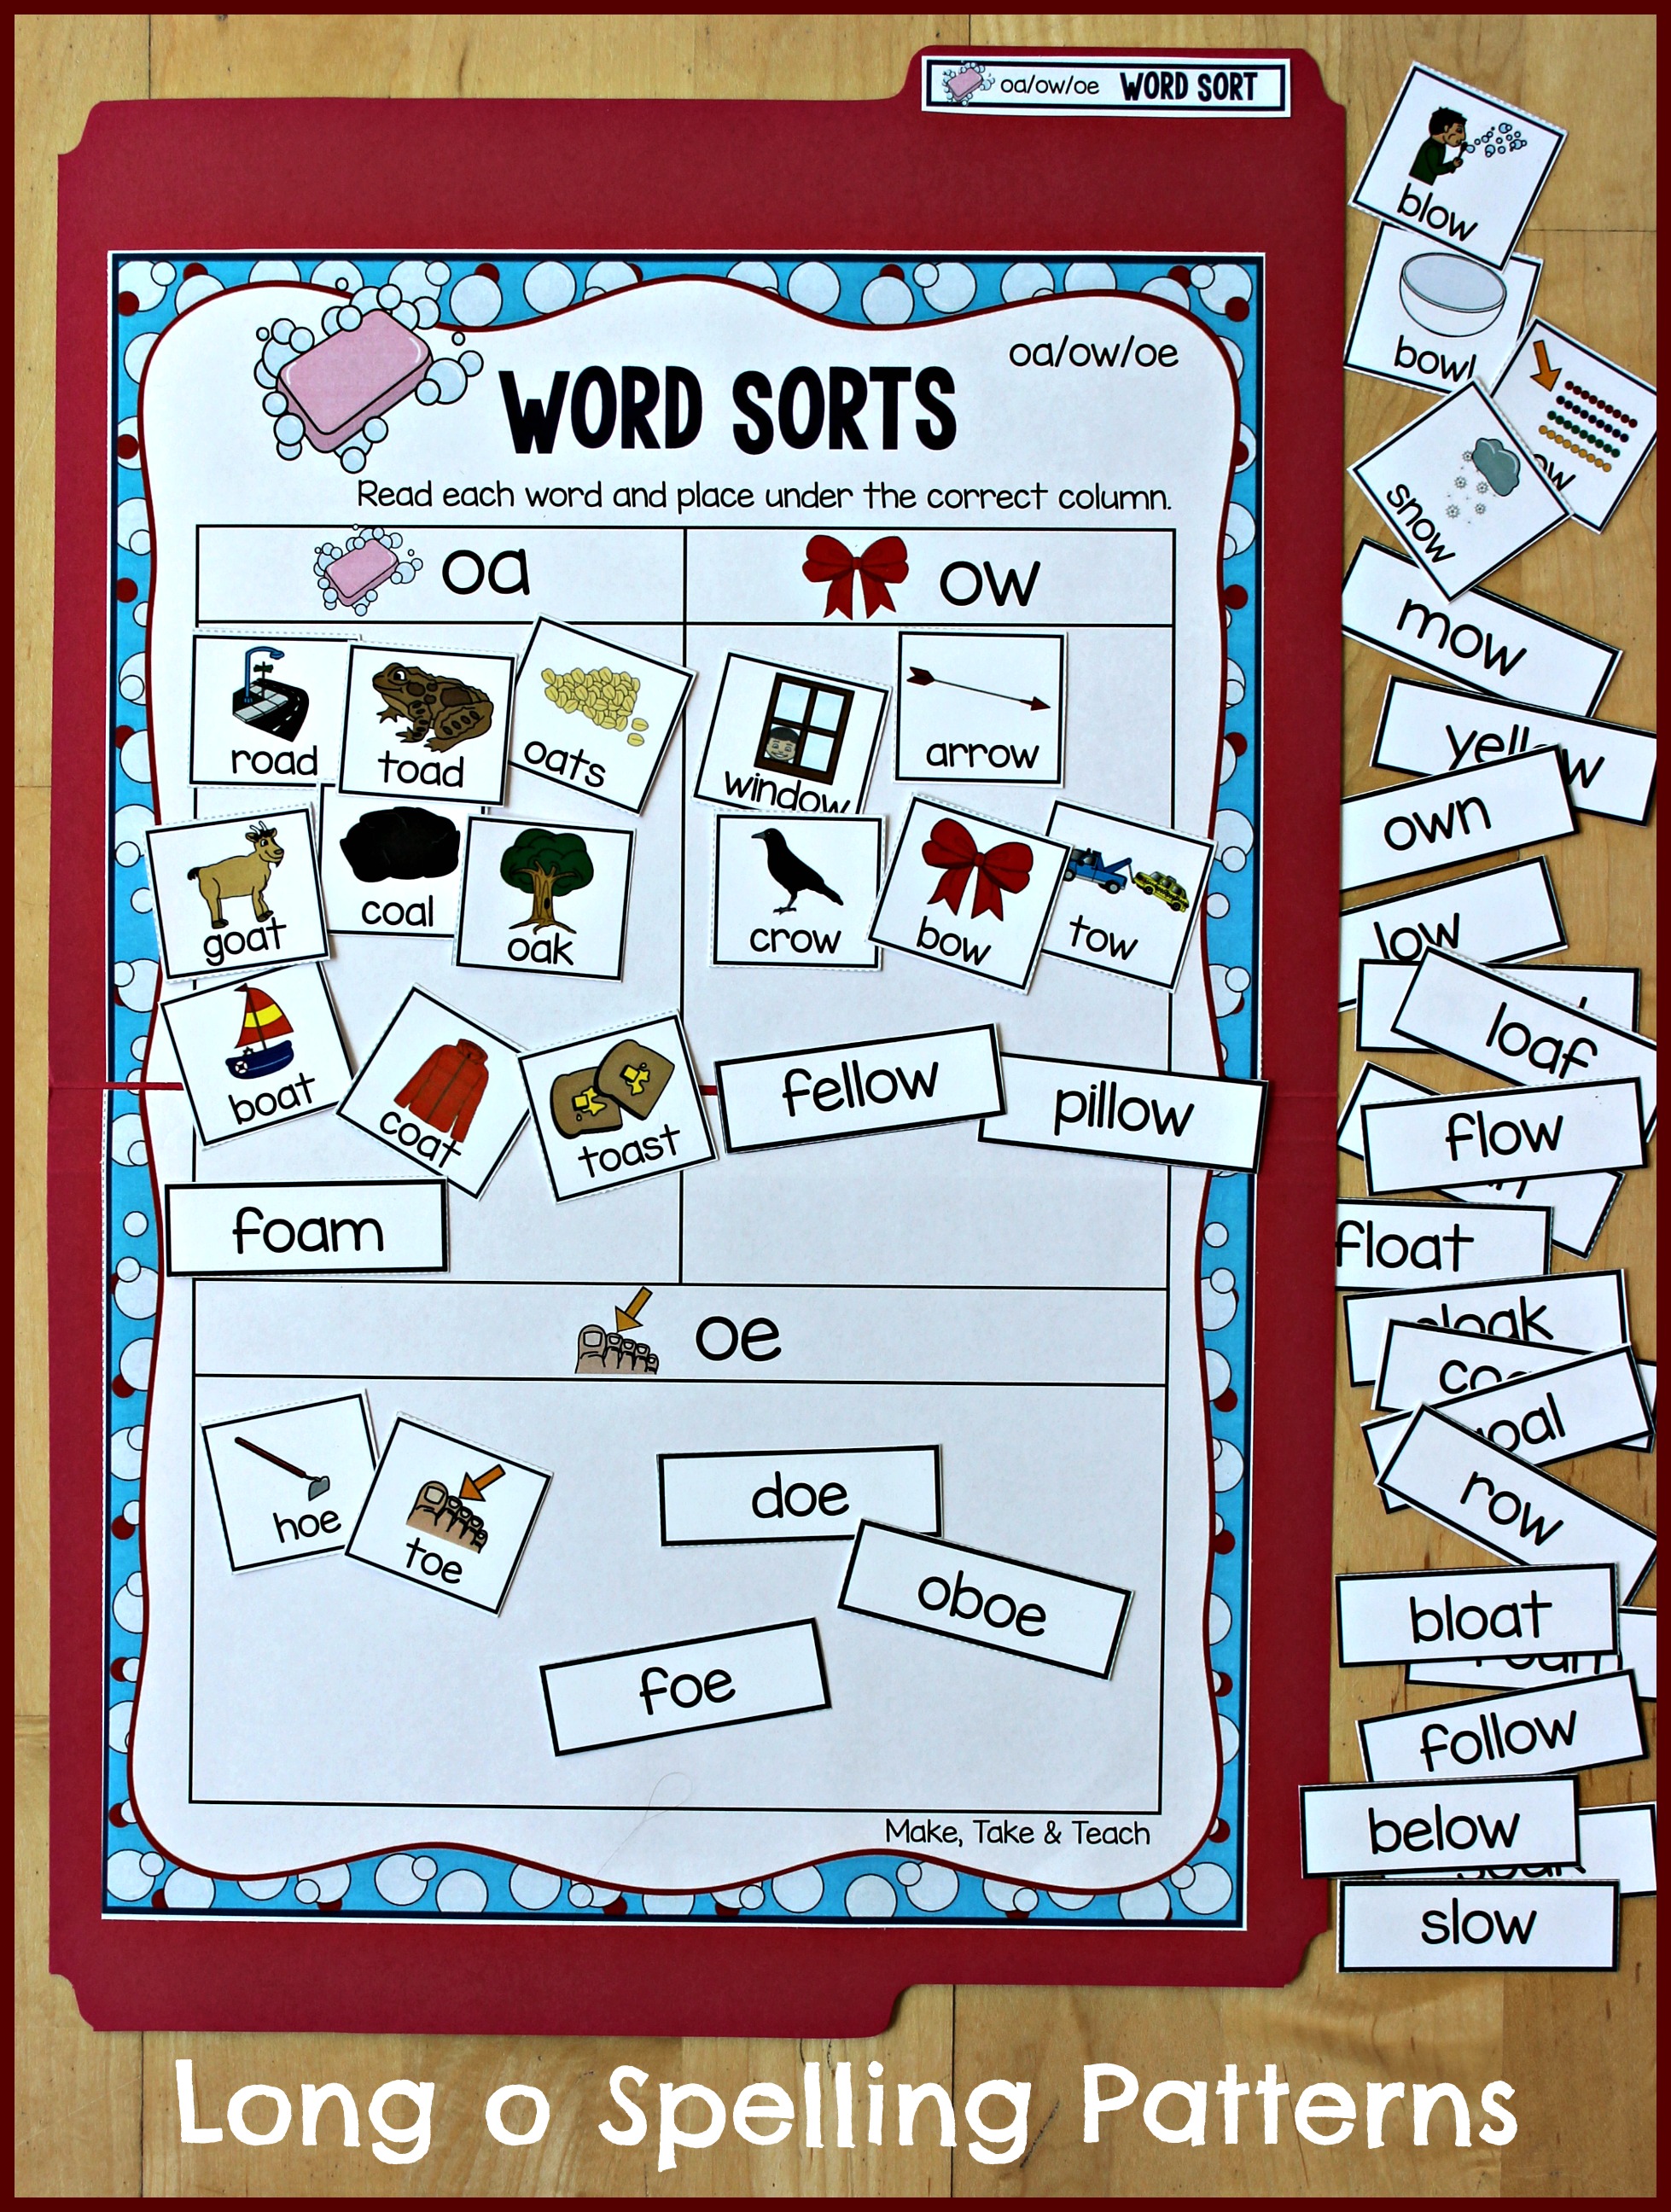 Teaching Long Vowel Spelling Patterns - Make Take & Teach